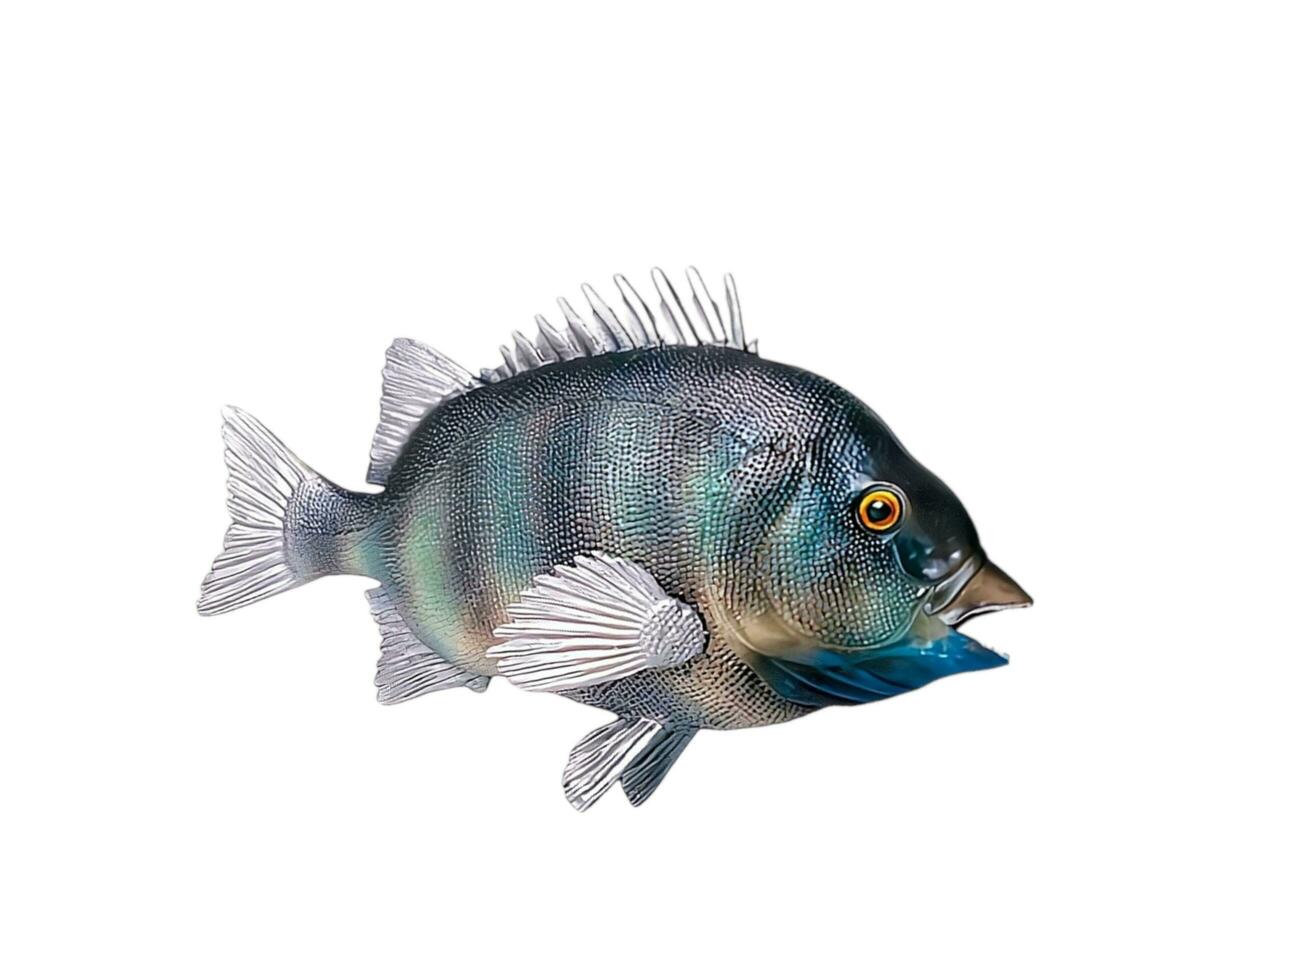 Miniature animal sheepshead fish isolated on white photo